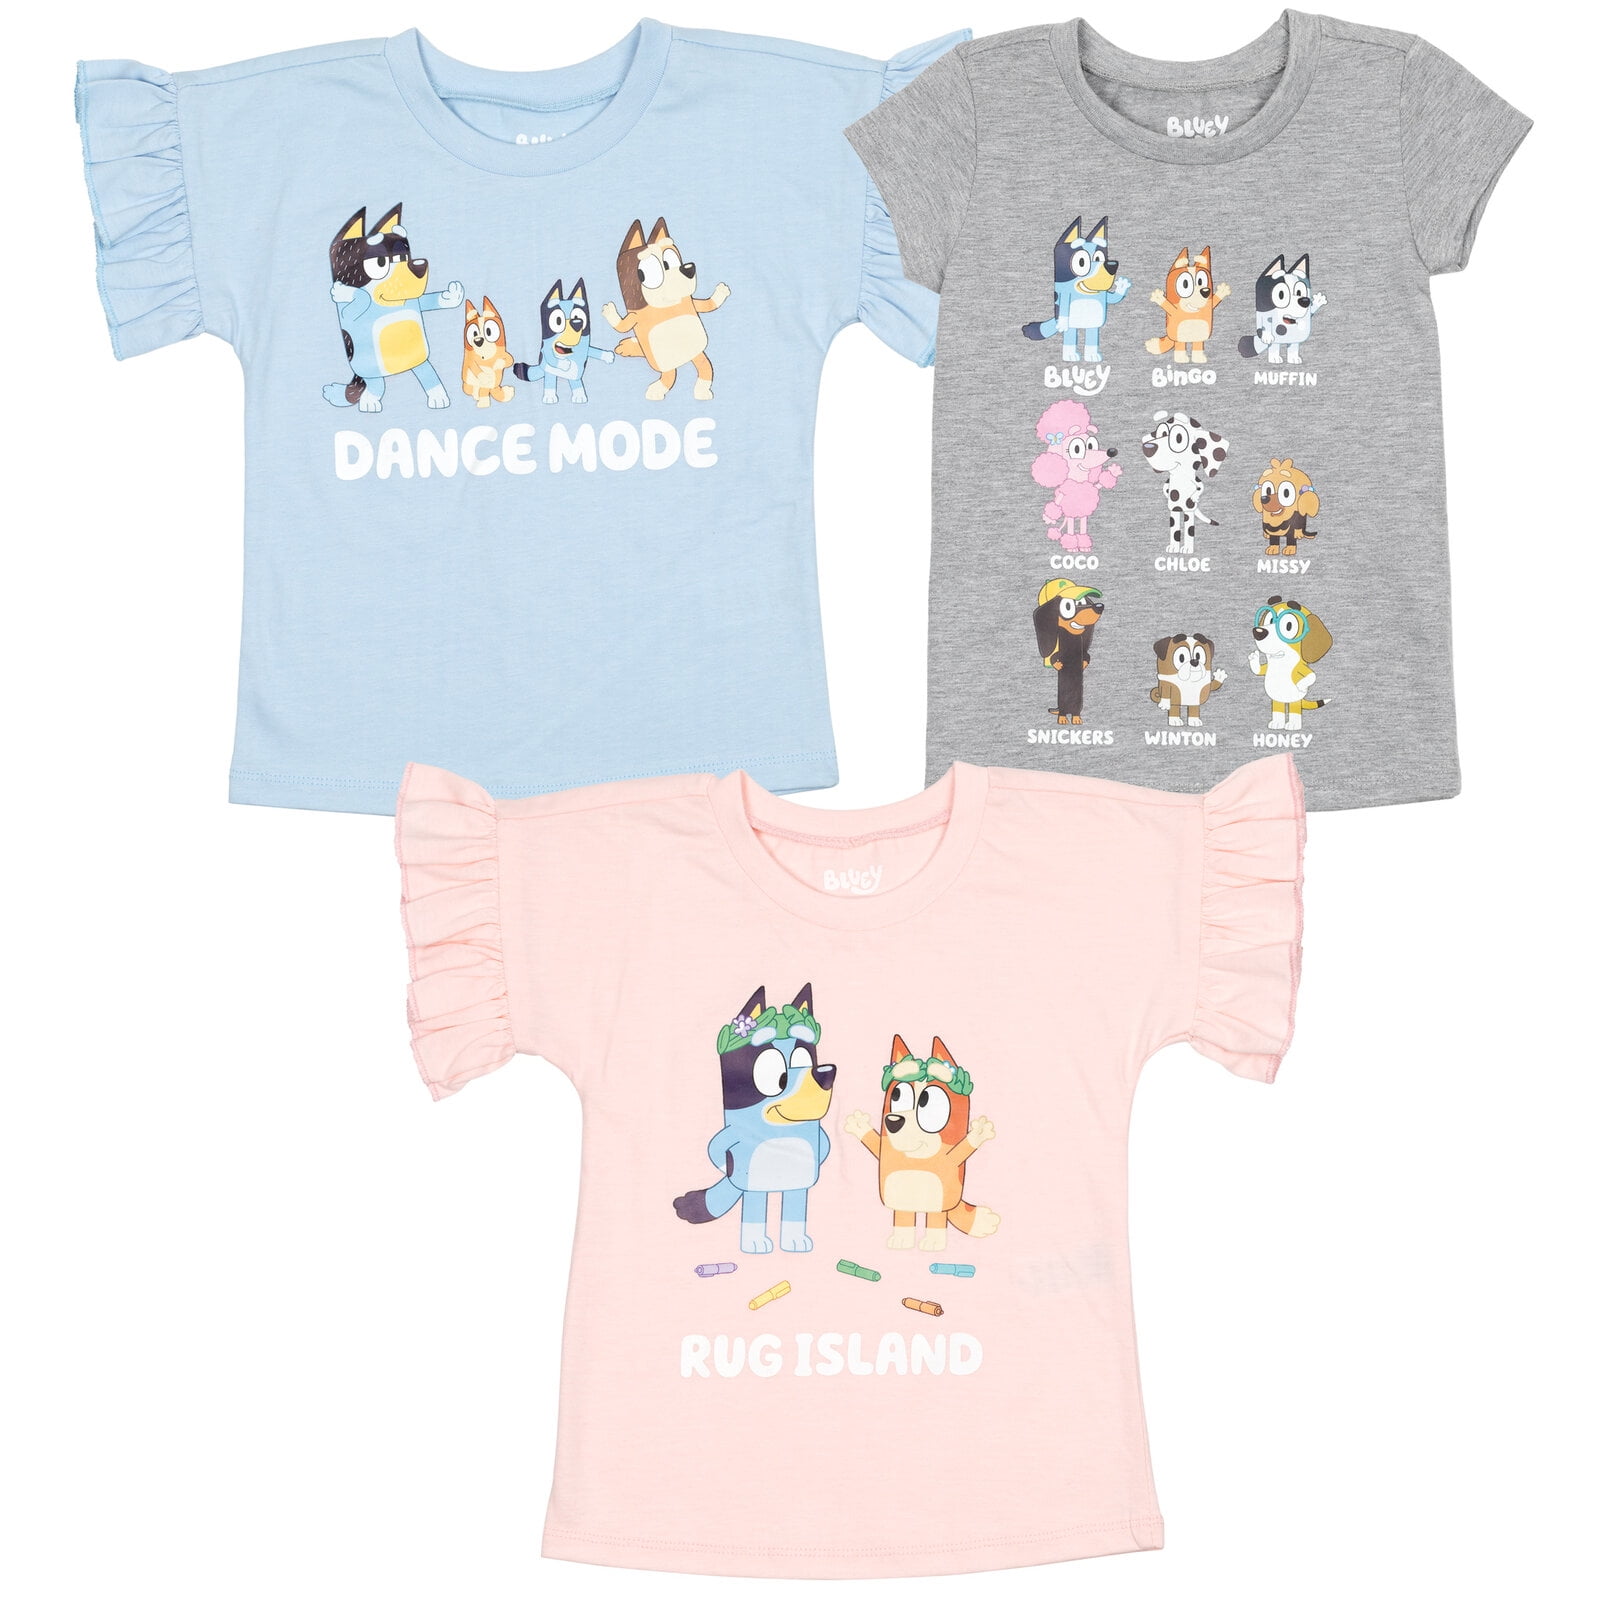 Bluey Bingo And Friends Girls Pack Graphic T-Shirts Blue / Grey / Pink 10-12 - Walmart.com